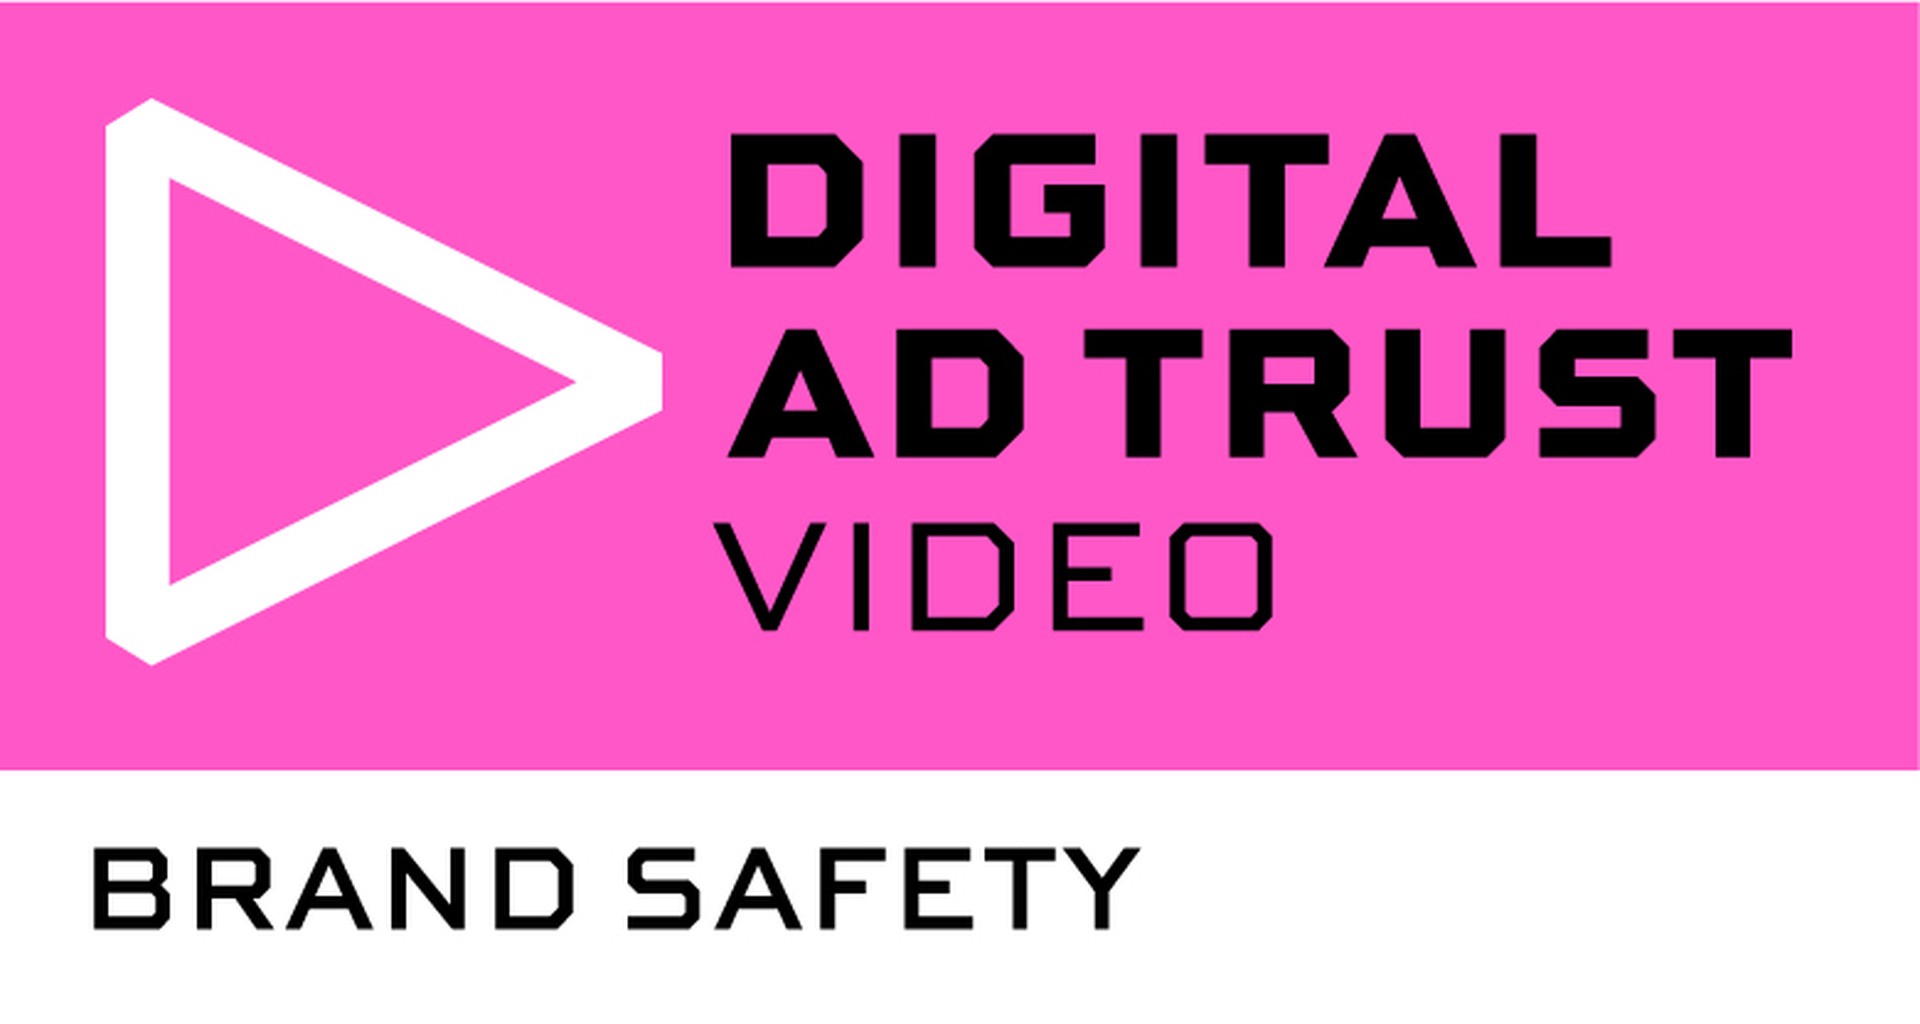 e7-labels_03_DAT 1 Brand Safety Video.jpg